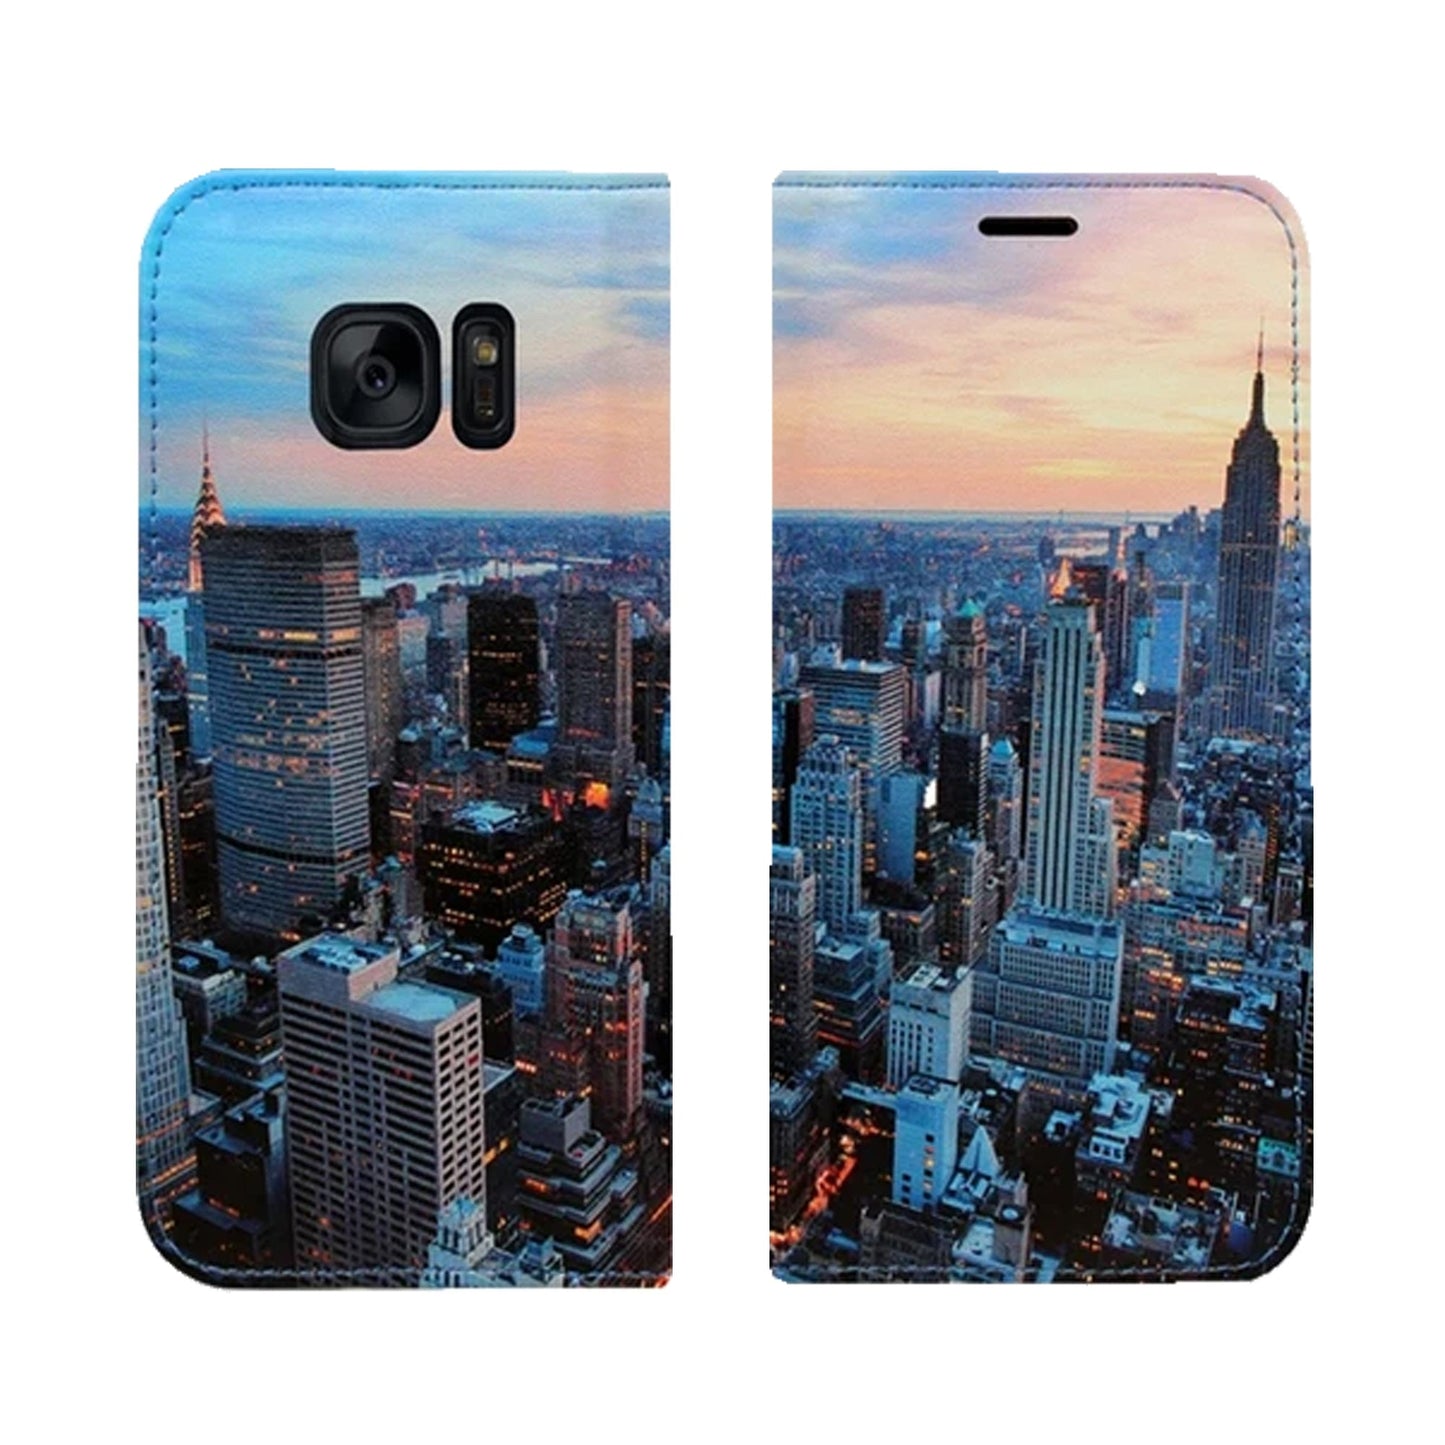 Coque New York City Panorama pour iPhone et Samsung